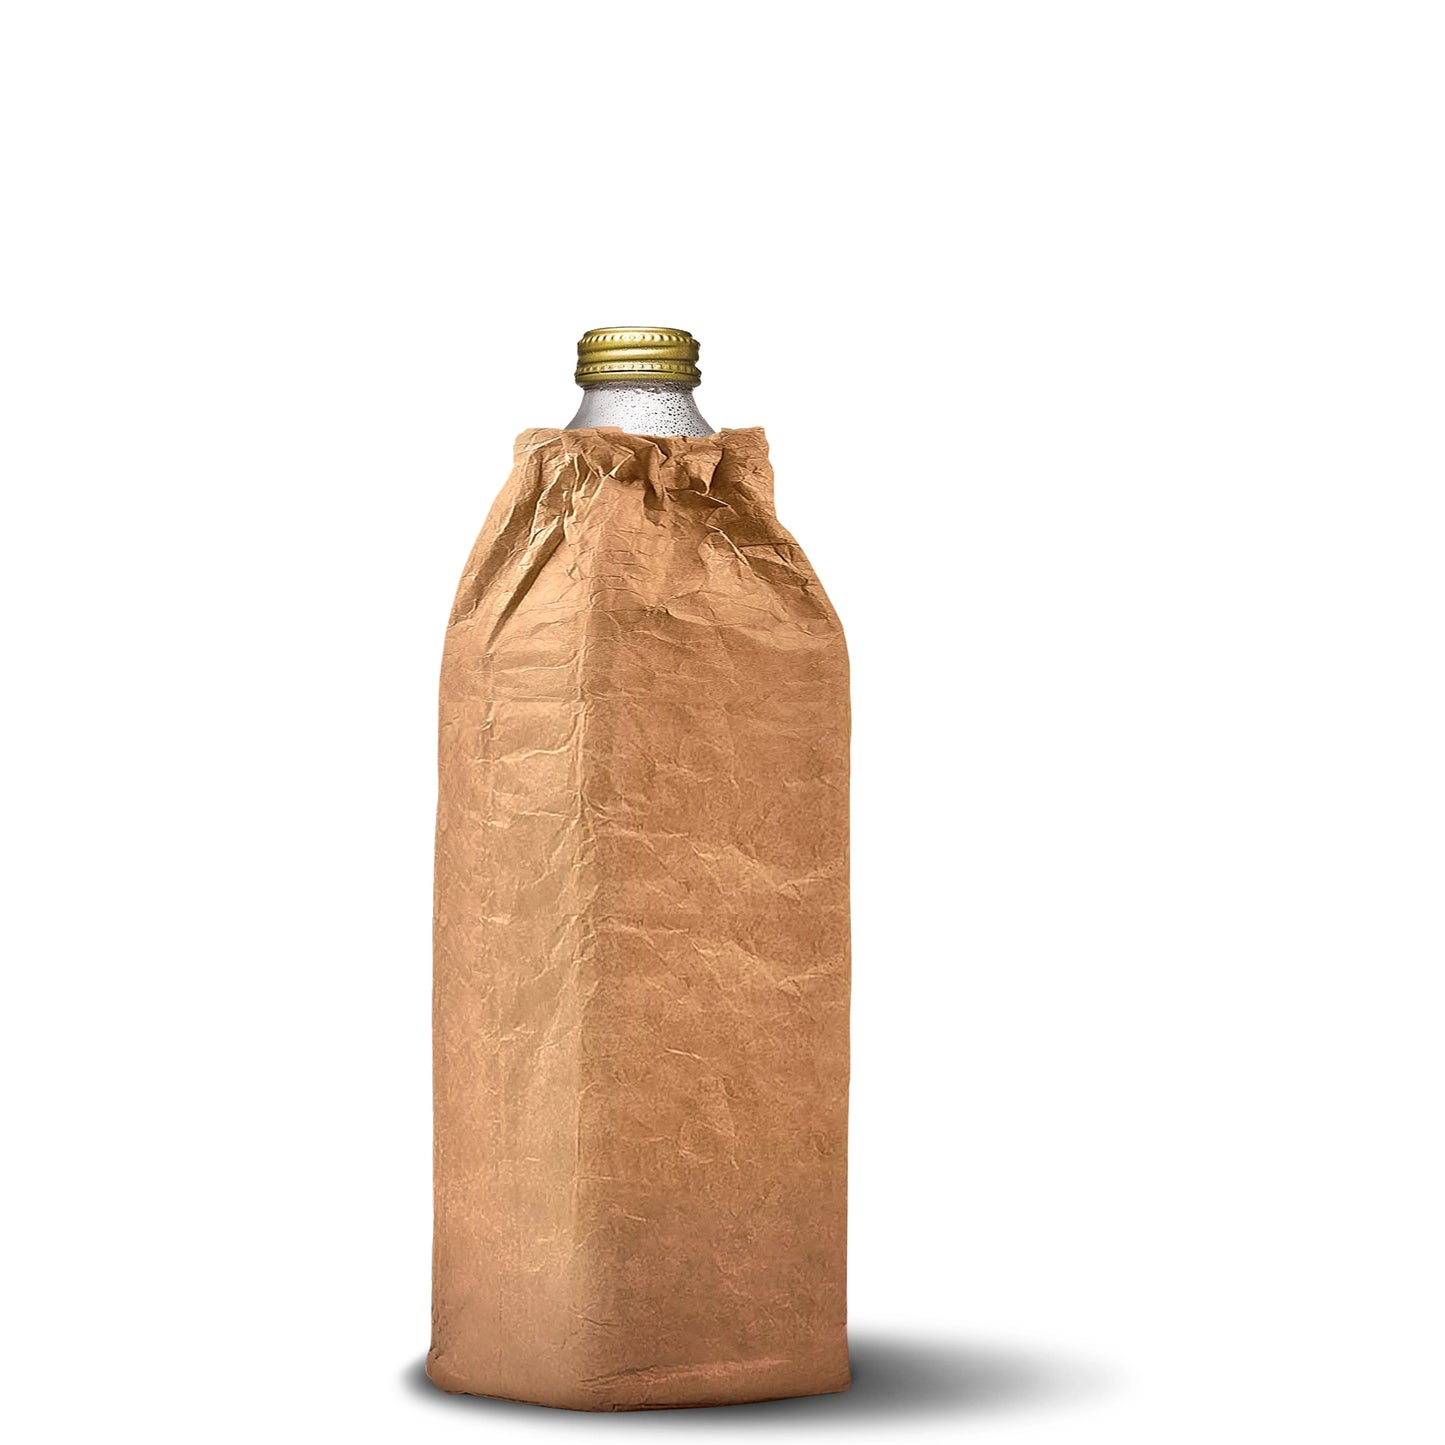 Koverupz Tyvek Brown Bag Art Insulated Wine Bottle/40oz